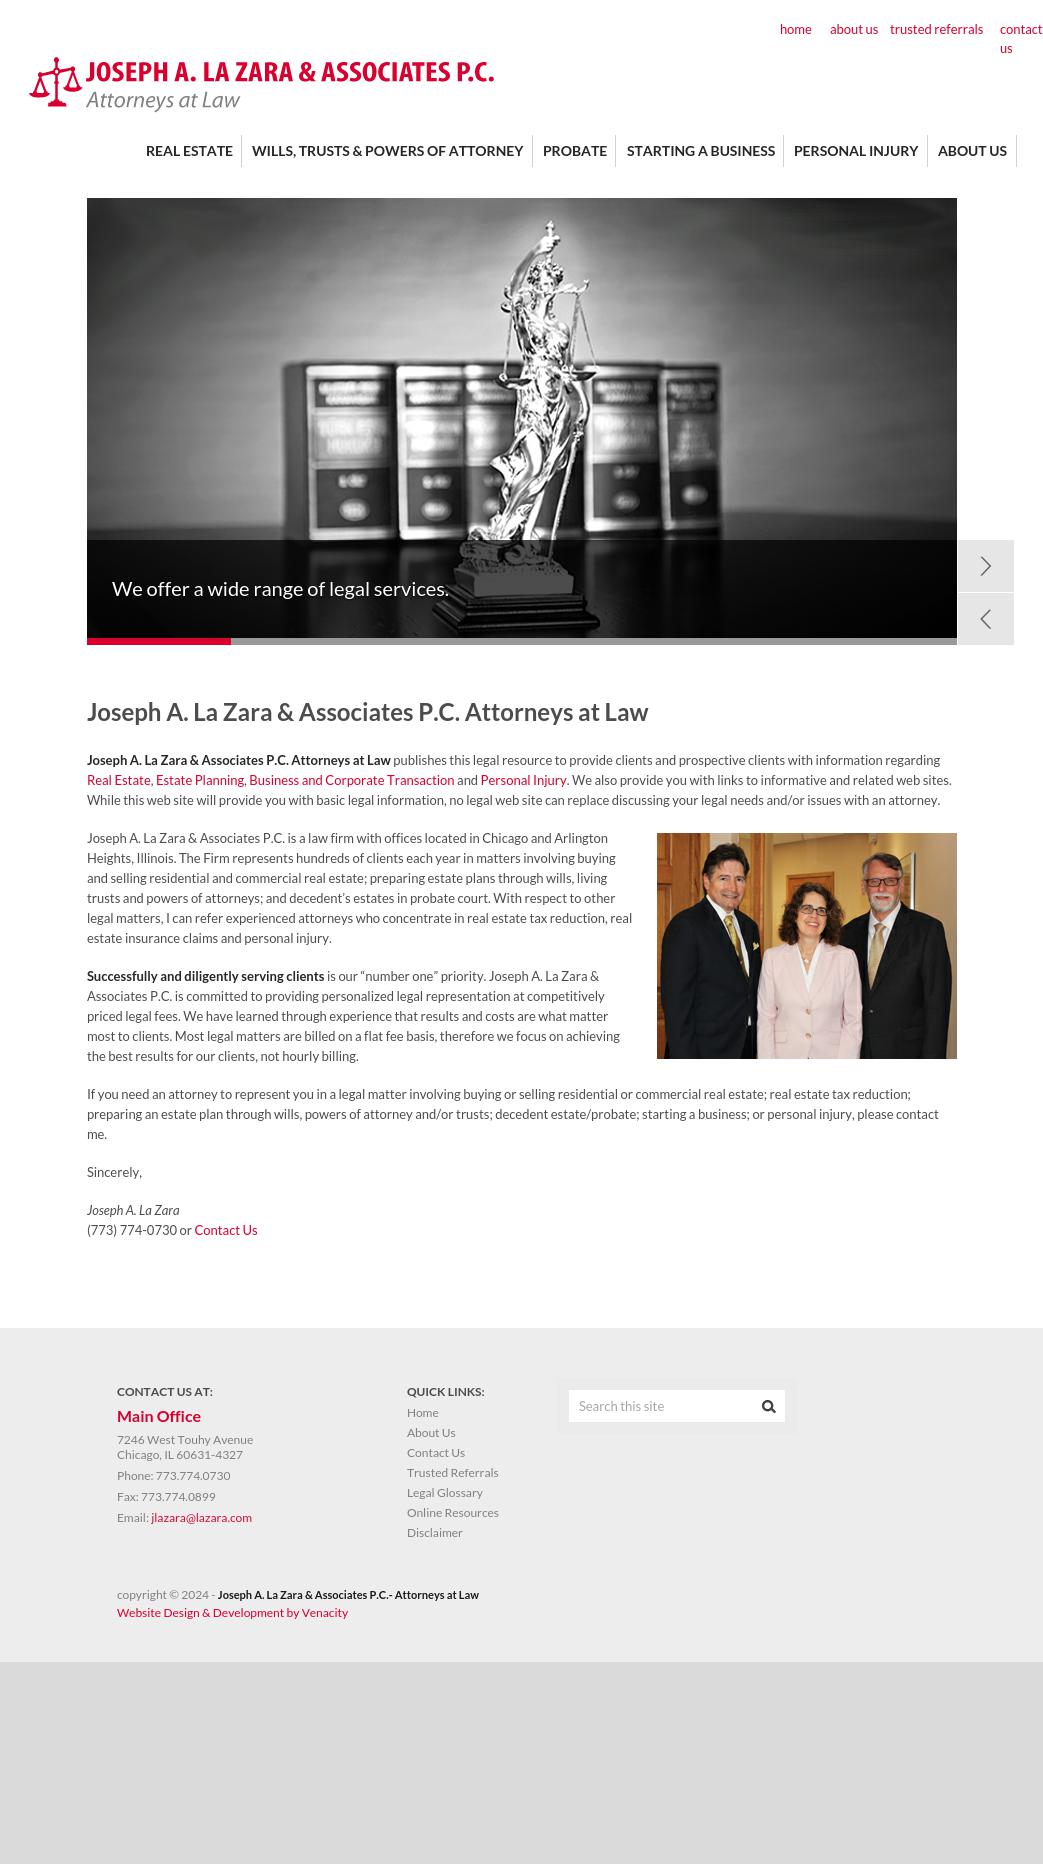 Joseph A. La Zara & Associates P.C. Attorneys at Law - Chicago IL Lawyers